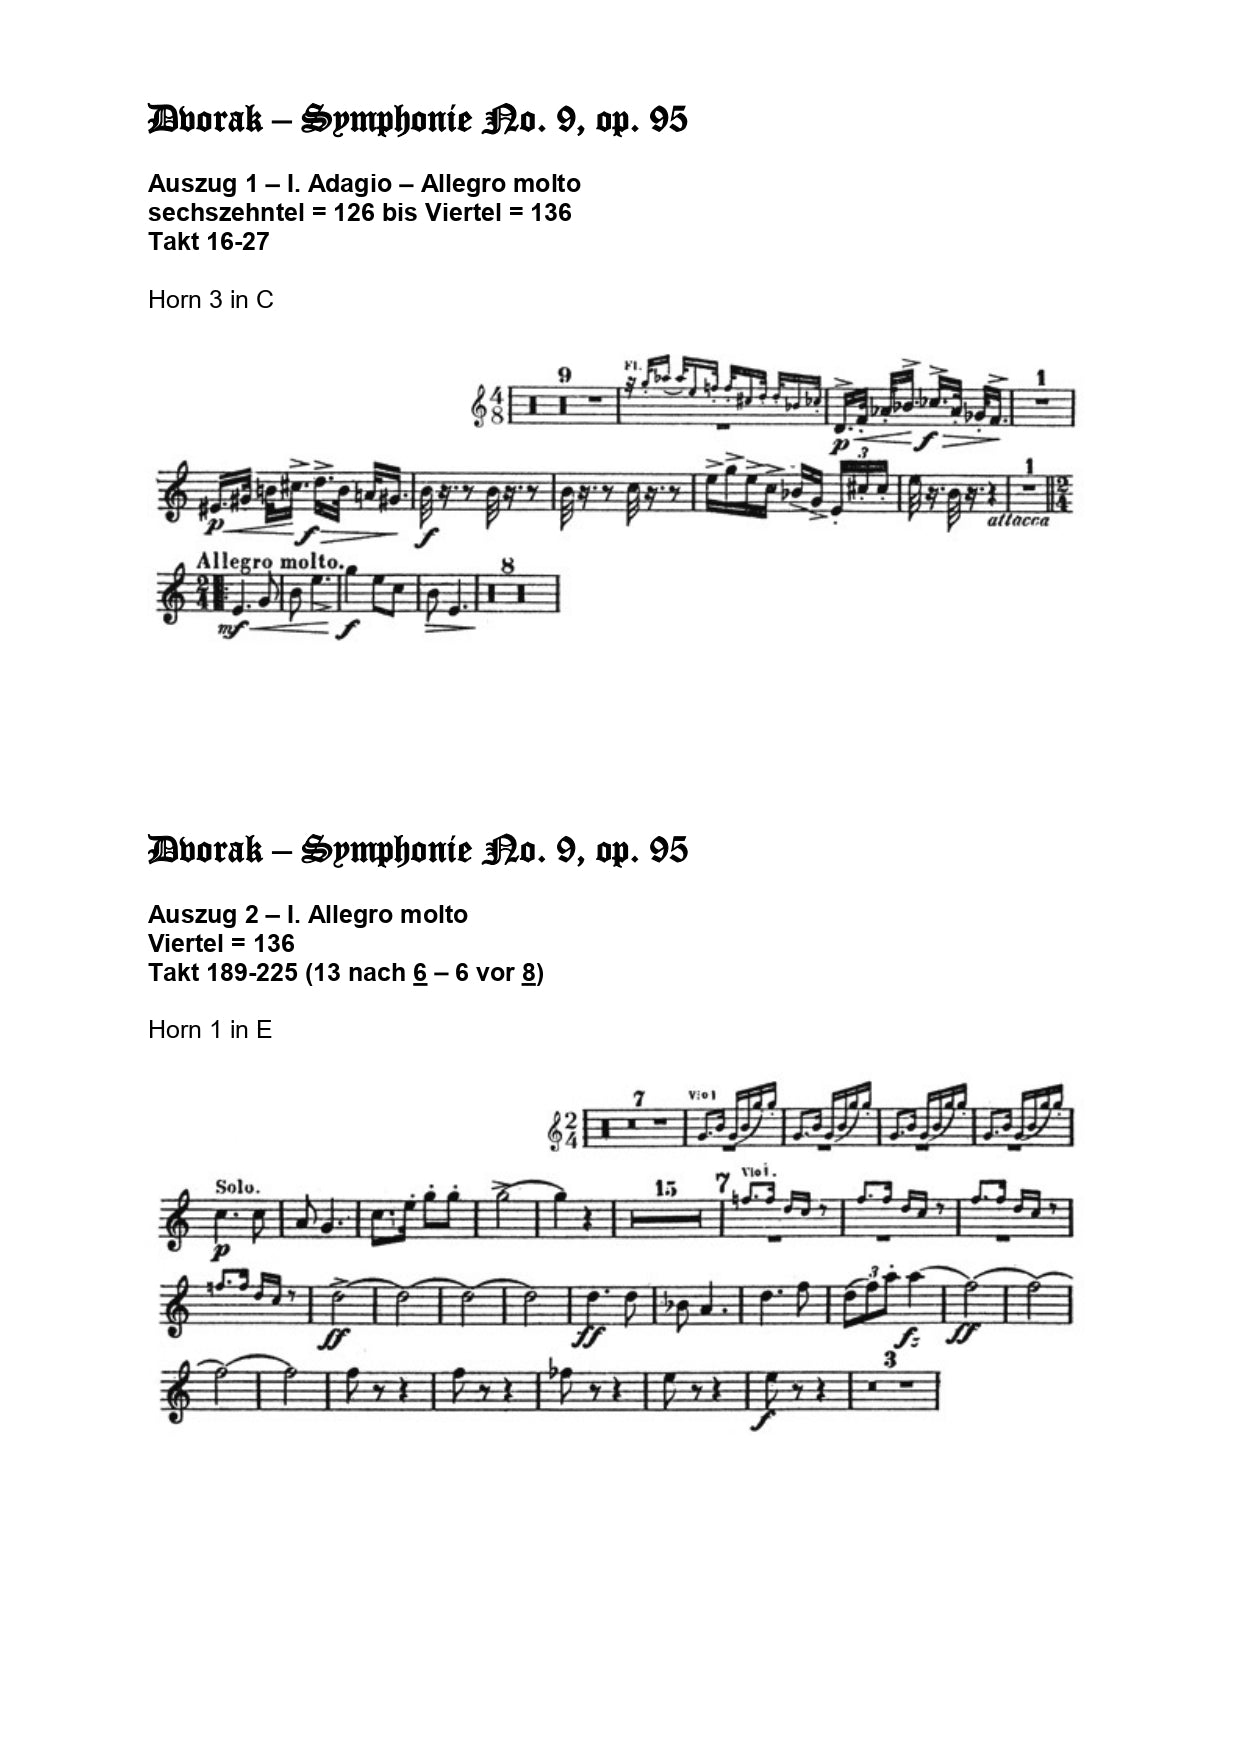 Orchester Studie - Antonin Dvorak - Symphonie No 9, Horn 1,2,3